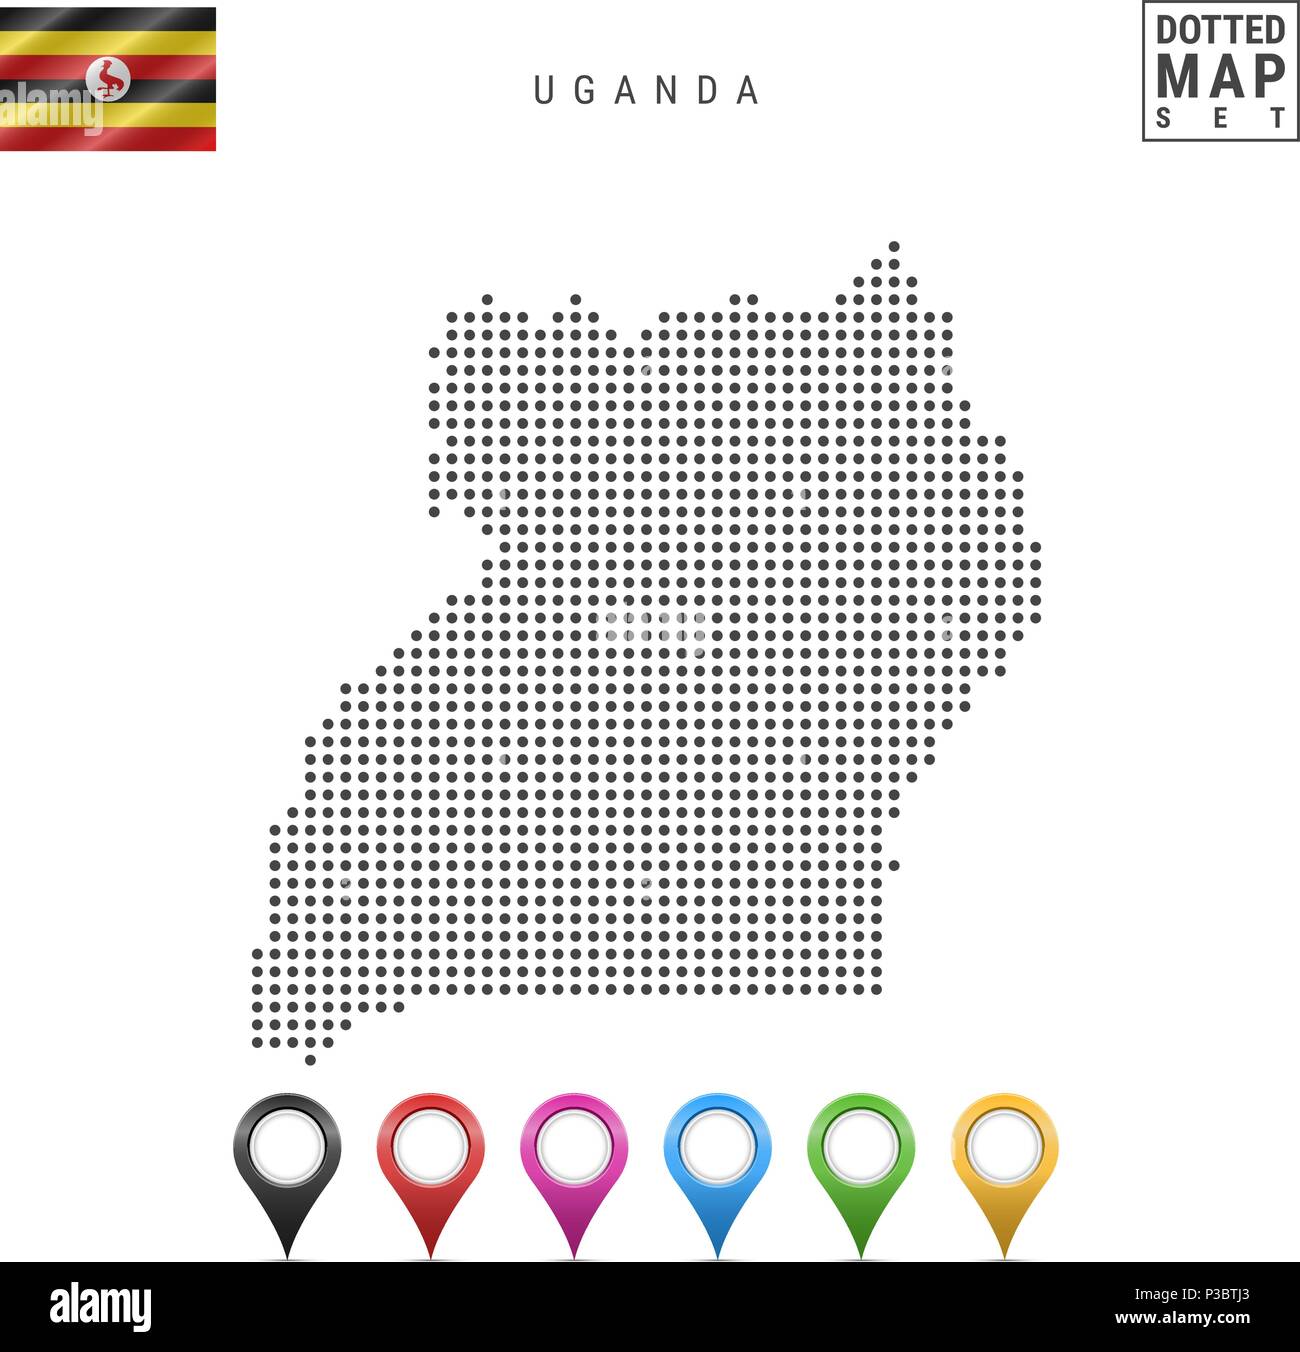 Dots Pattern Vector Map of Uganda. Stylized Silhouette of Uganda. Flag of Uganda. Set of Multicolored Map Markers Stock Vector